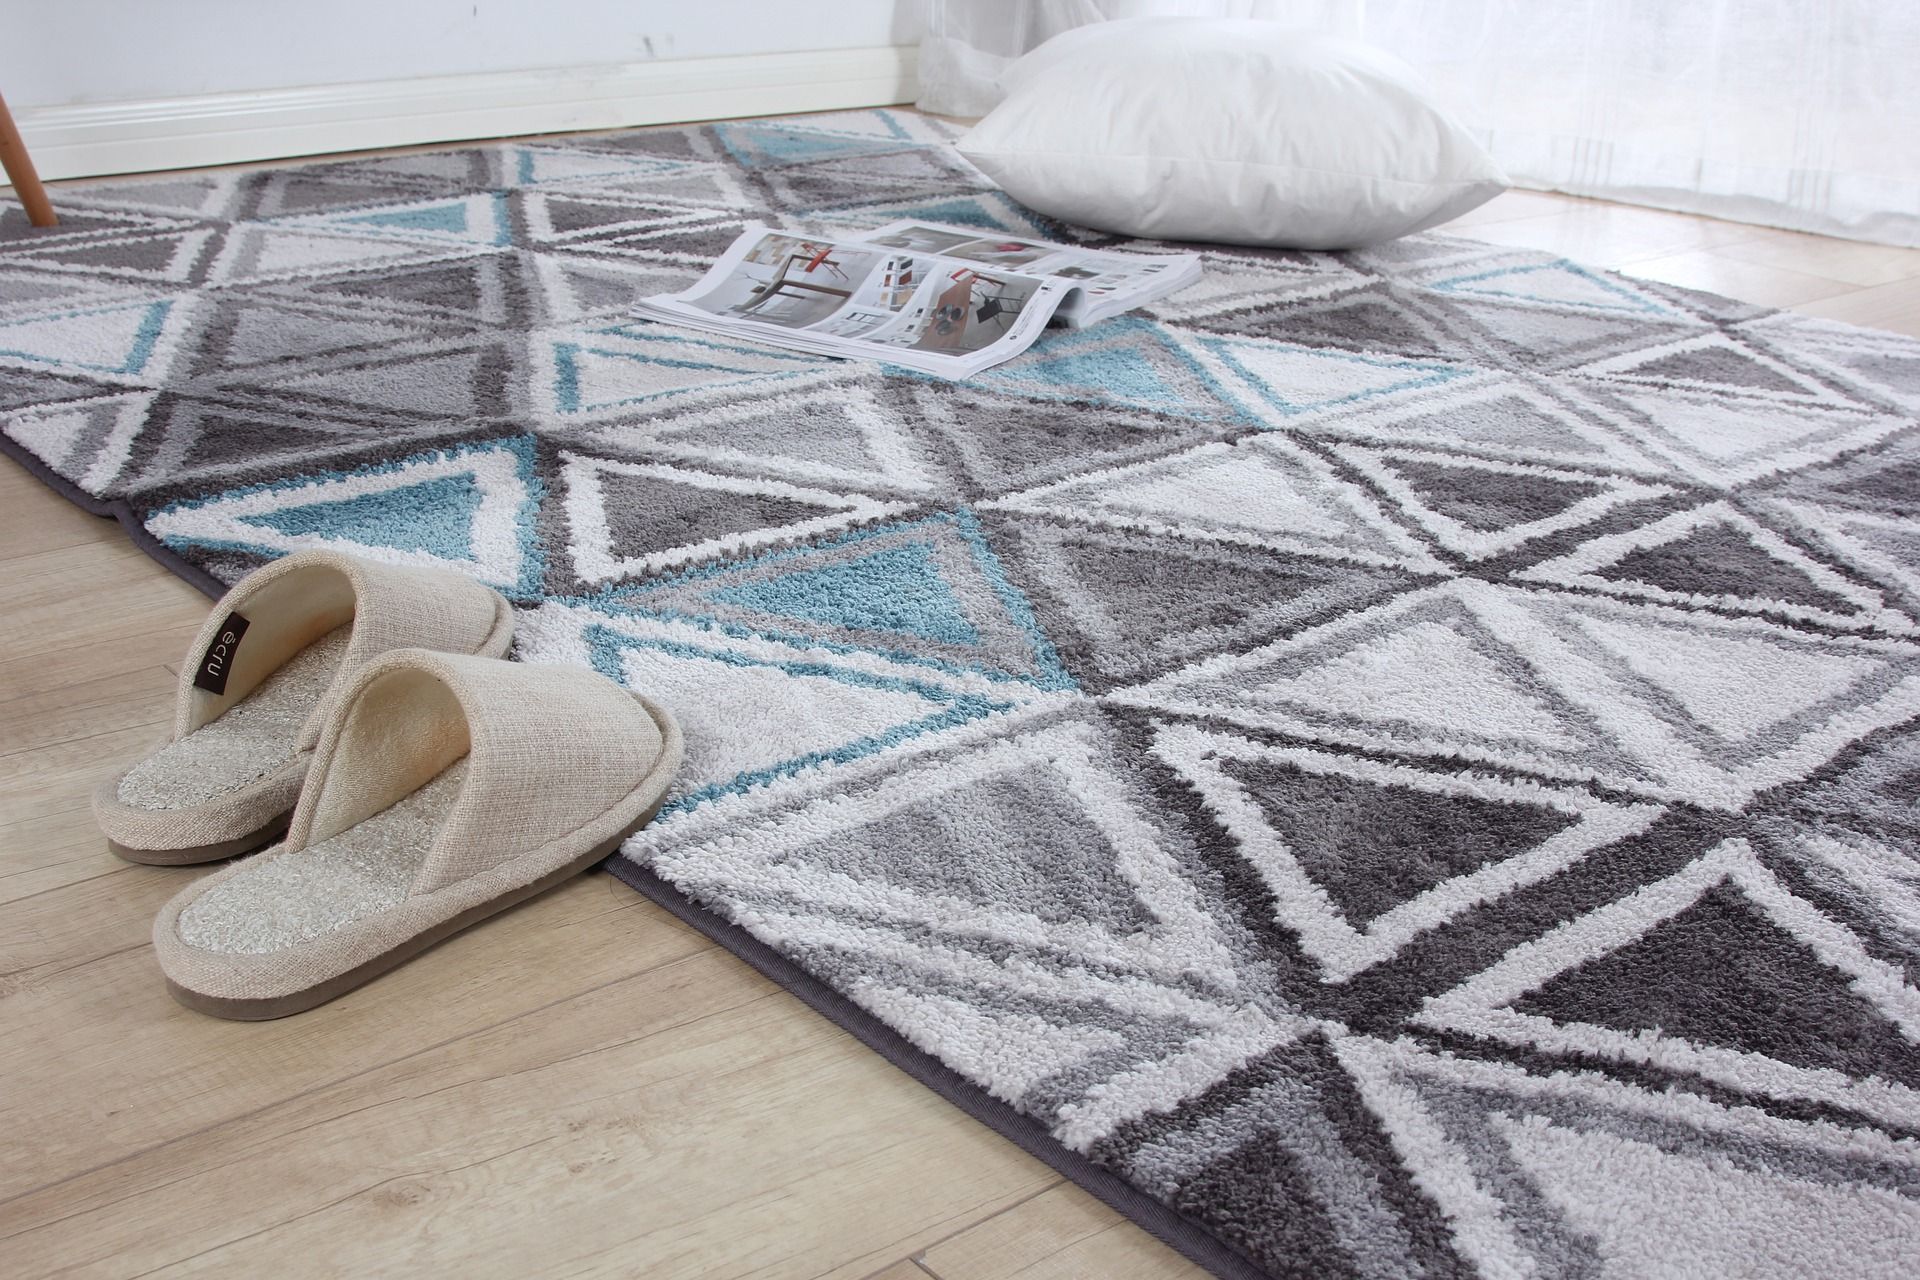 Comfy looking slippers on warm, soft patterned rug on static caravan floor